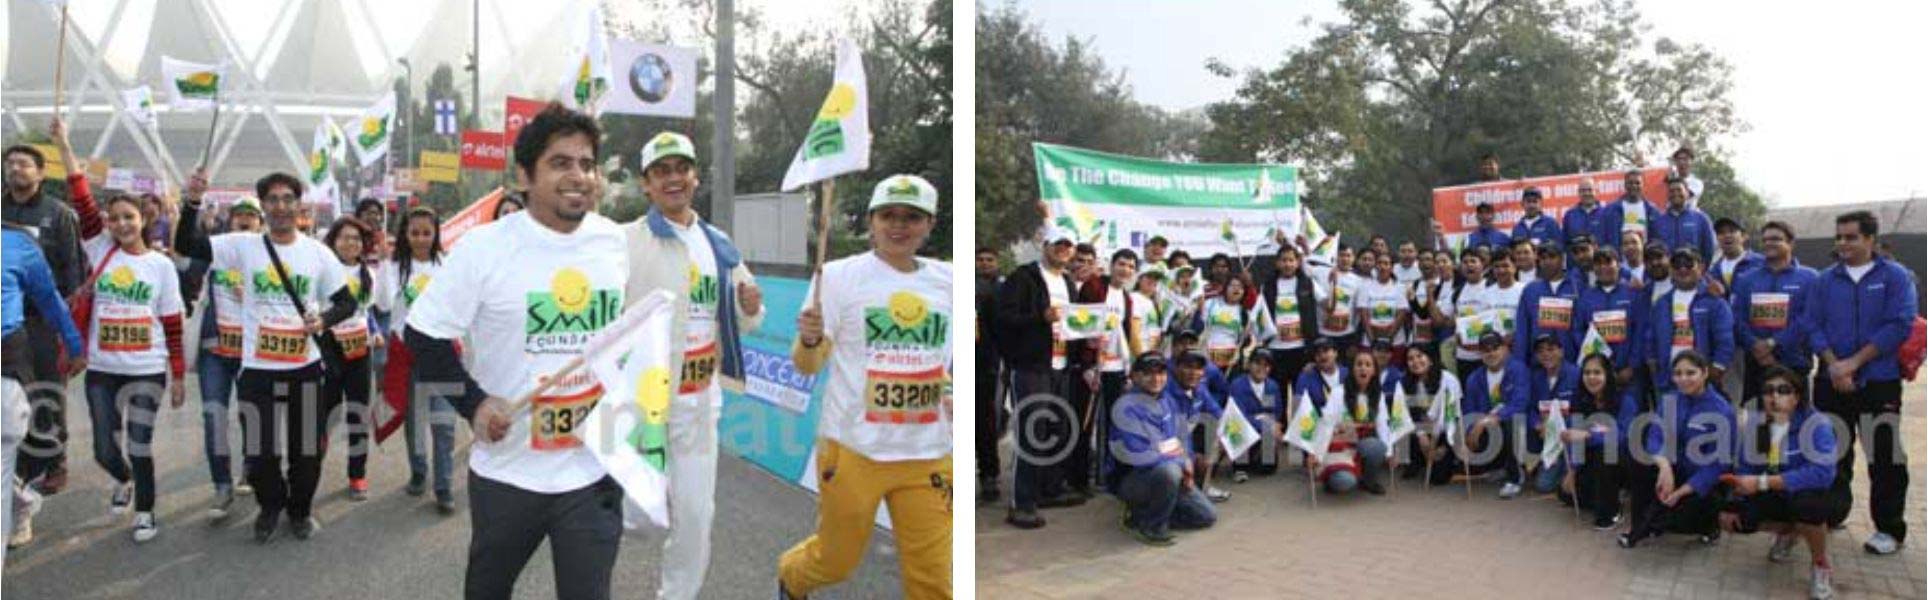 Smile Foundation runs at Airtel Delhi Half Marathon 2013